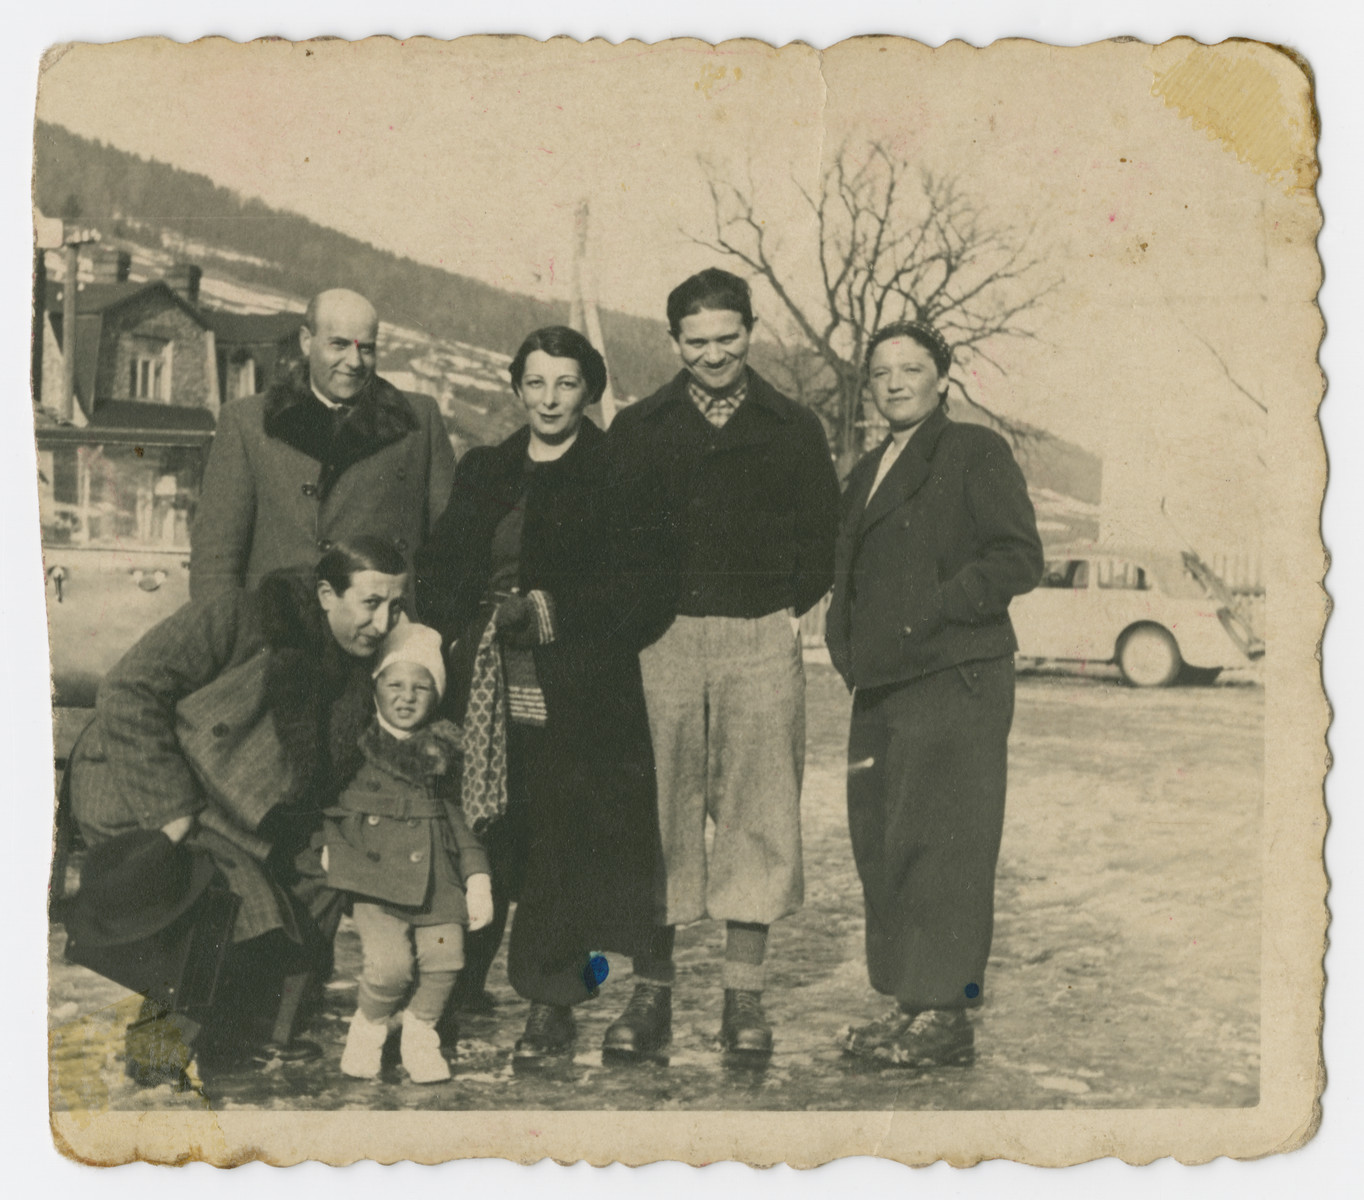 A group of friends pose while on an excursion in prewar Poland.

Alexander and Jurek Ogurek are at the front left.  Karola Ogurek is standing in the center.